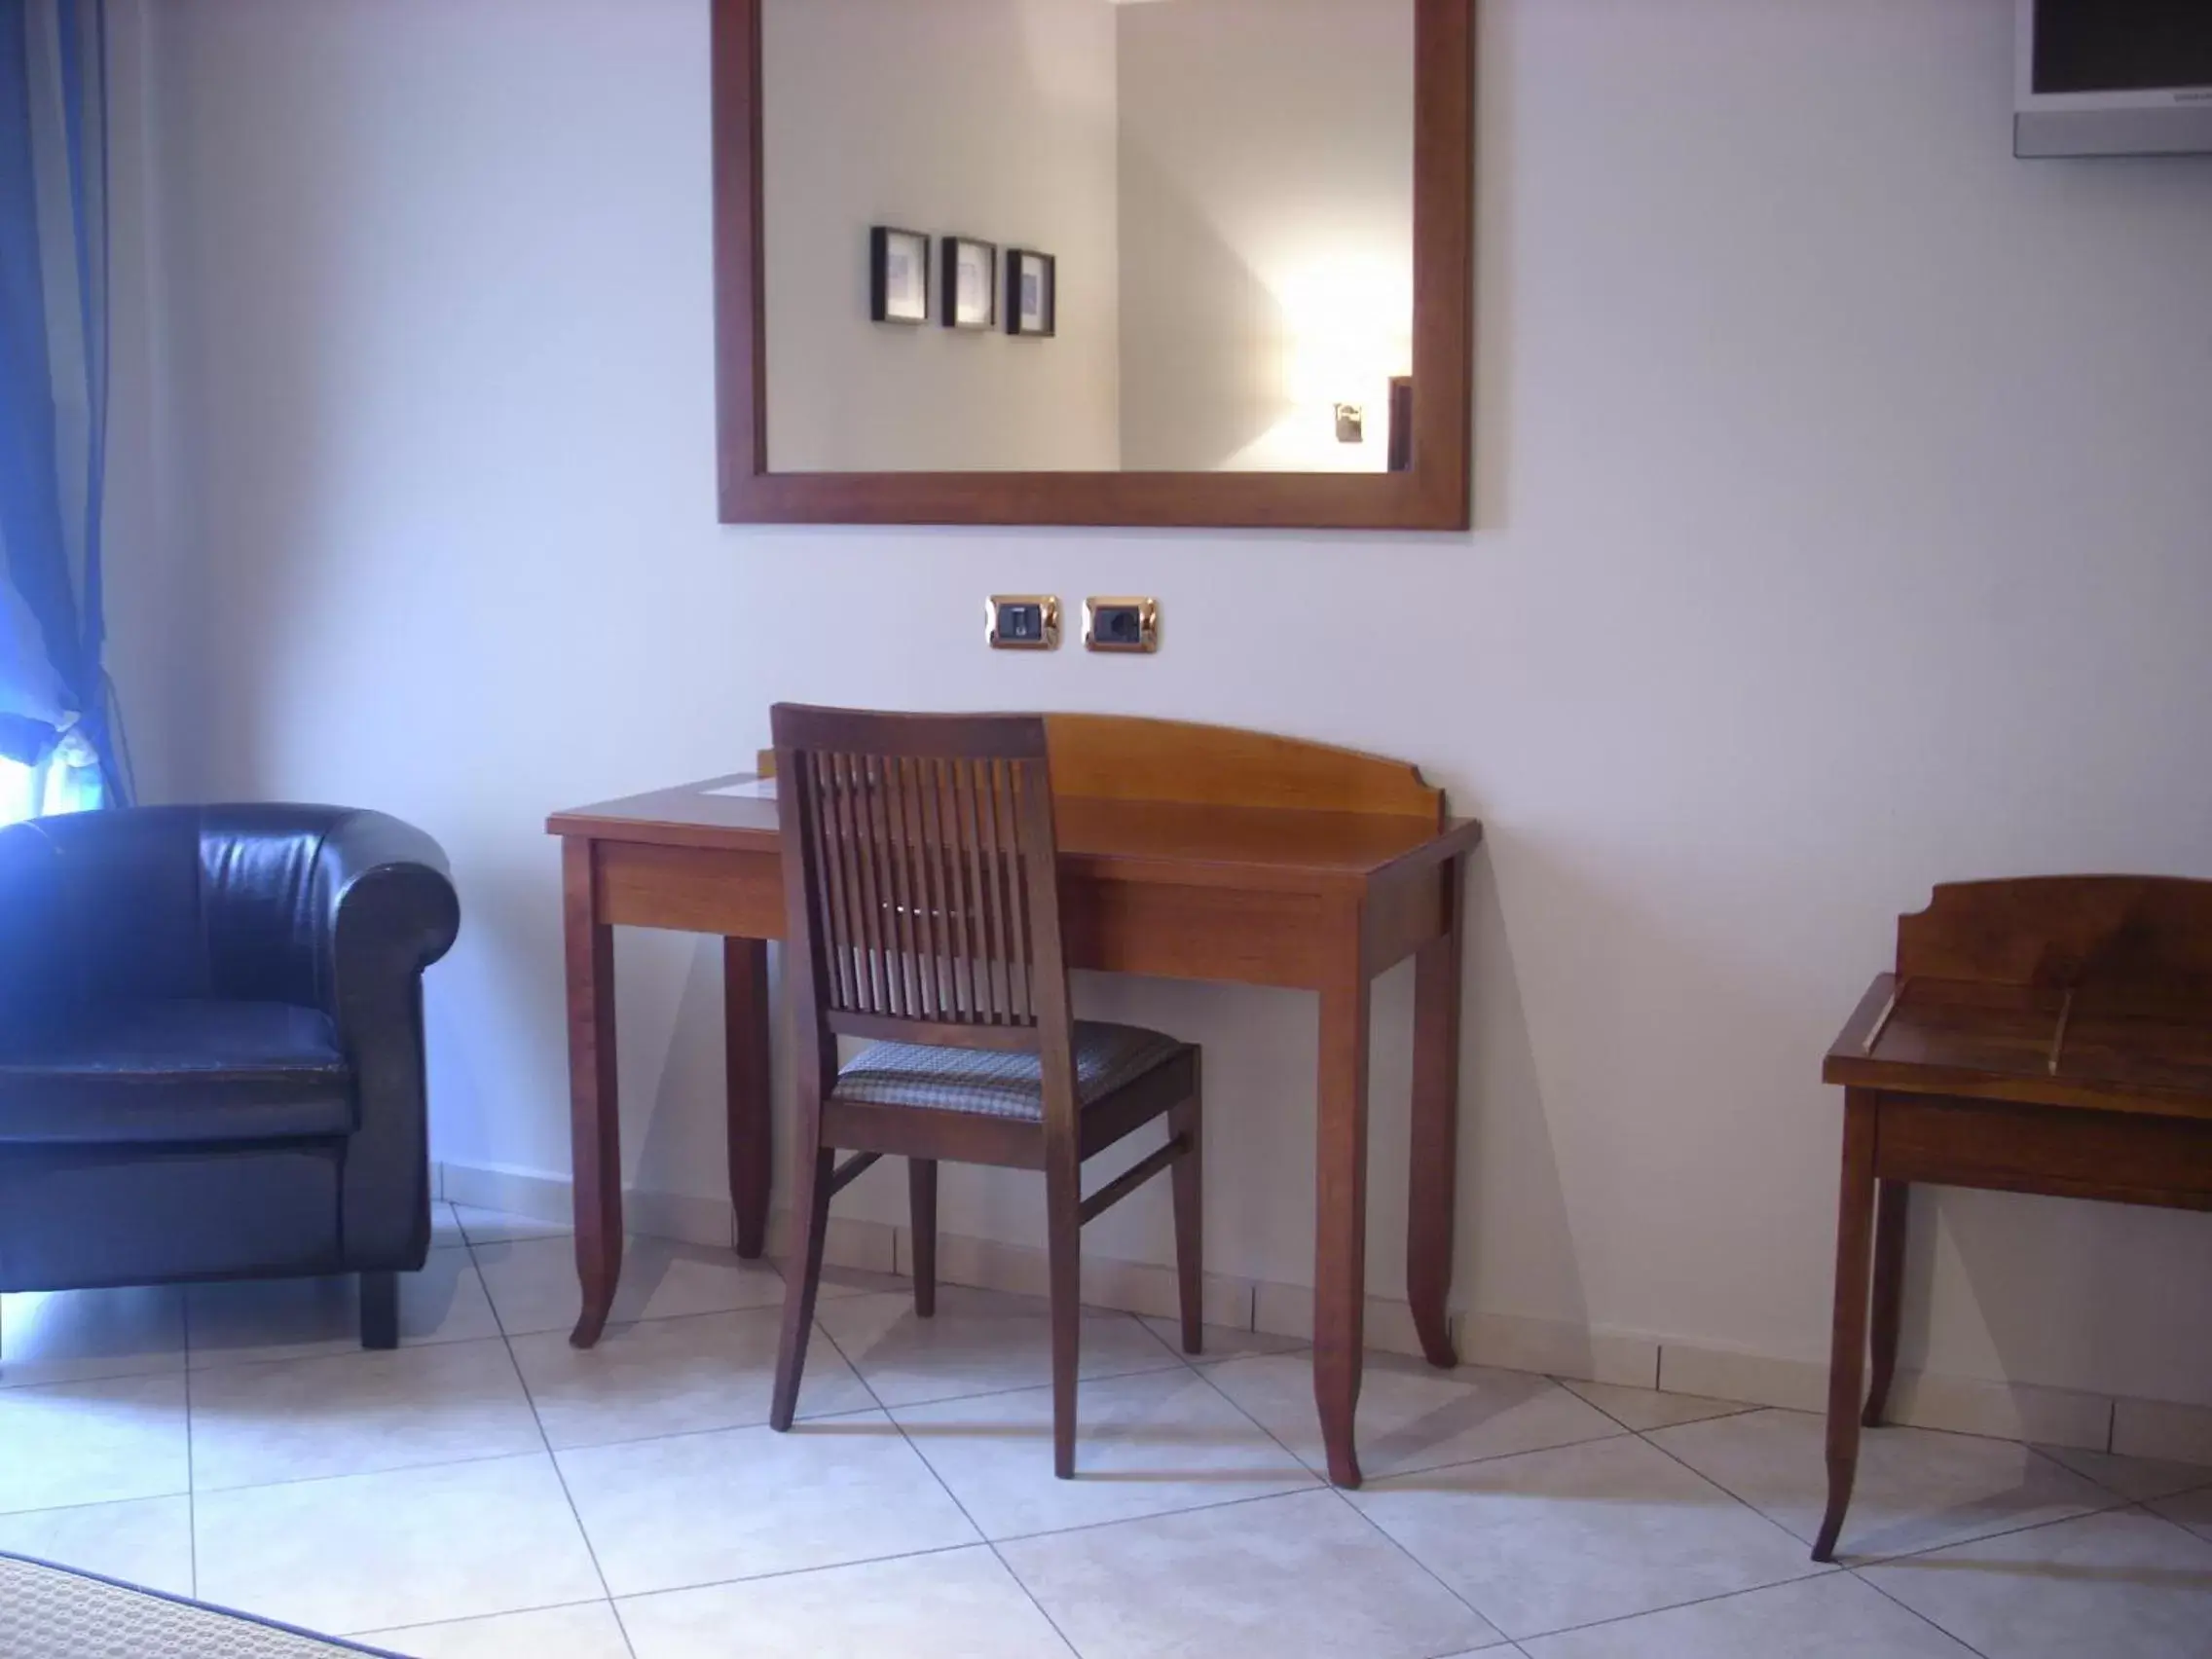 Seating area, Dining Area in Hotel Taormina